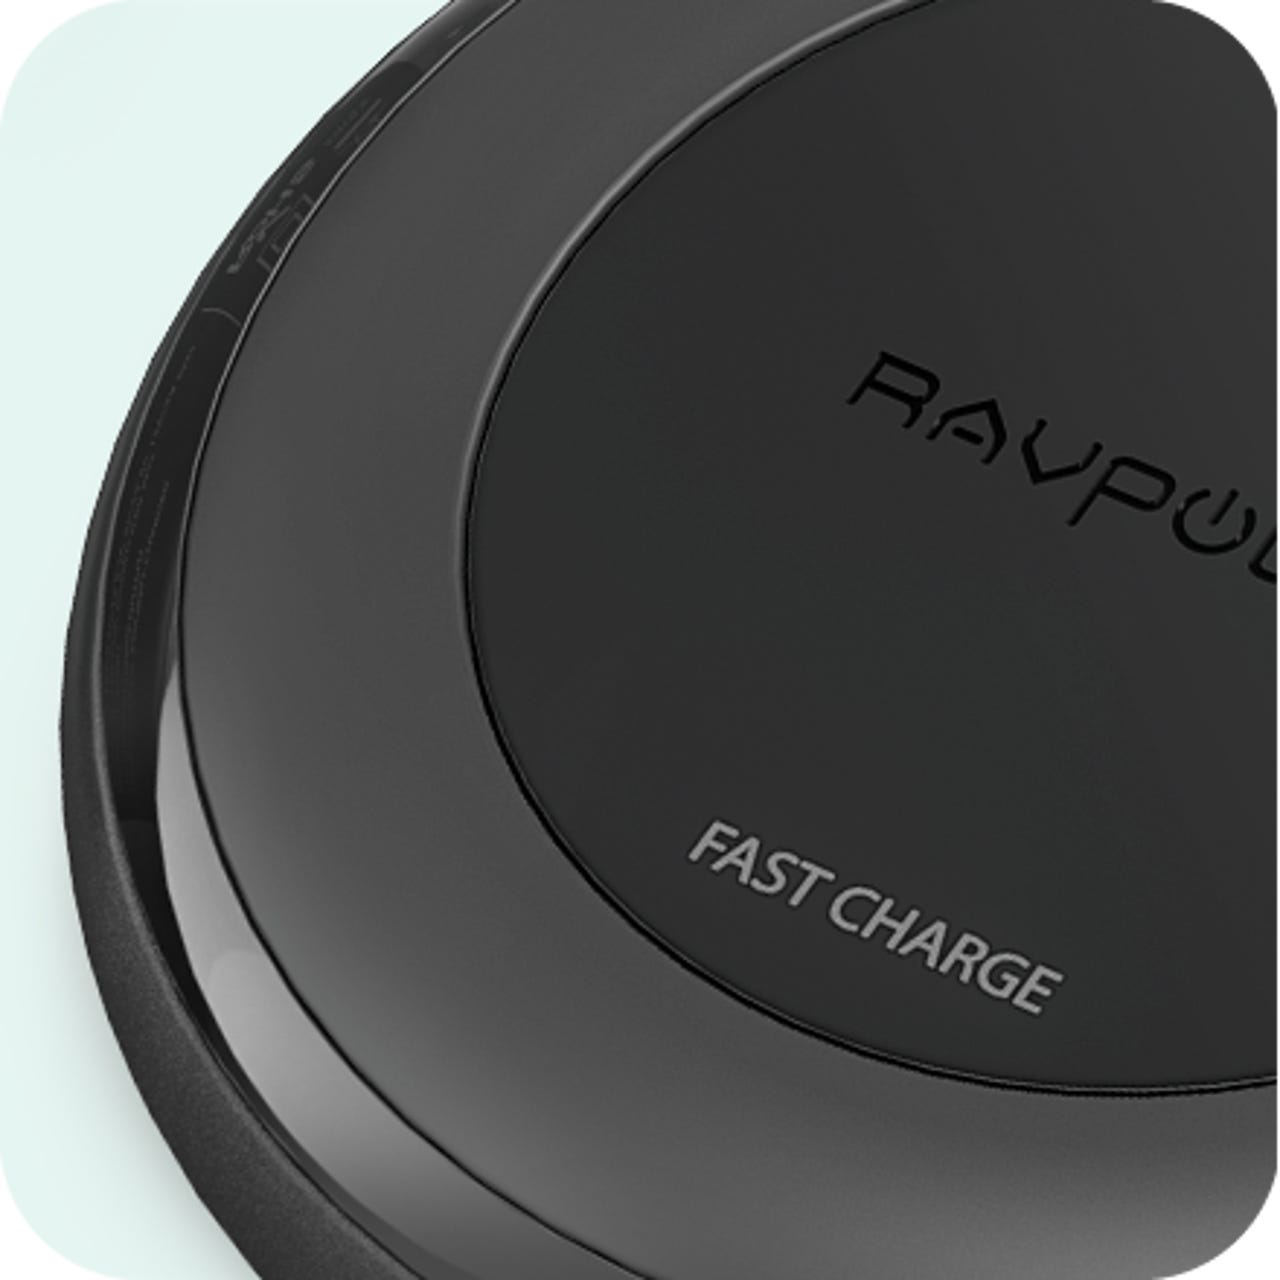 RAVPower Wireless Charging Pad